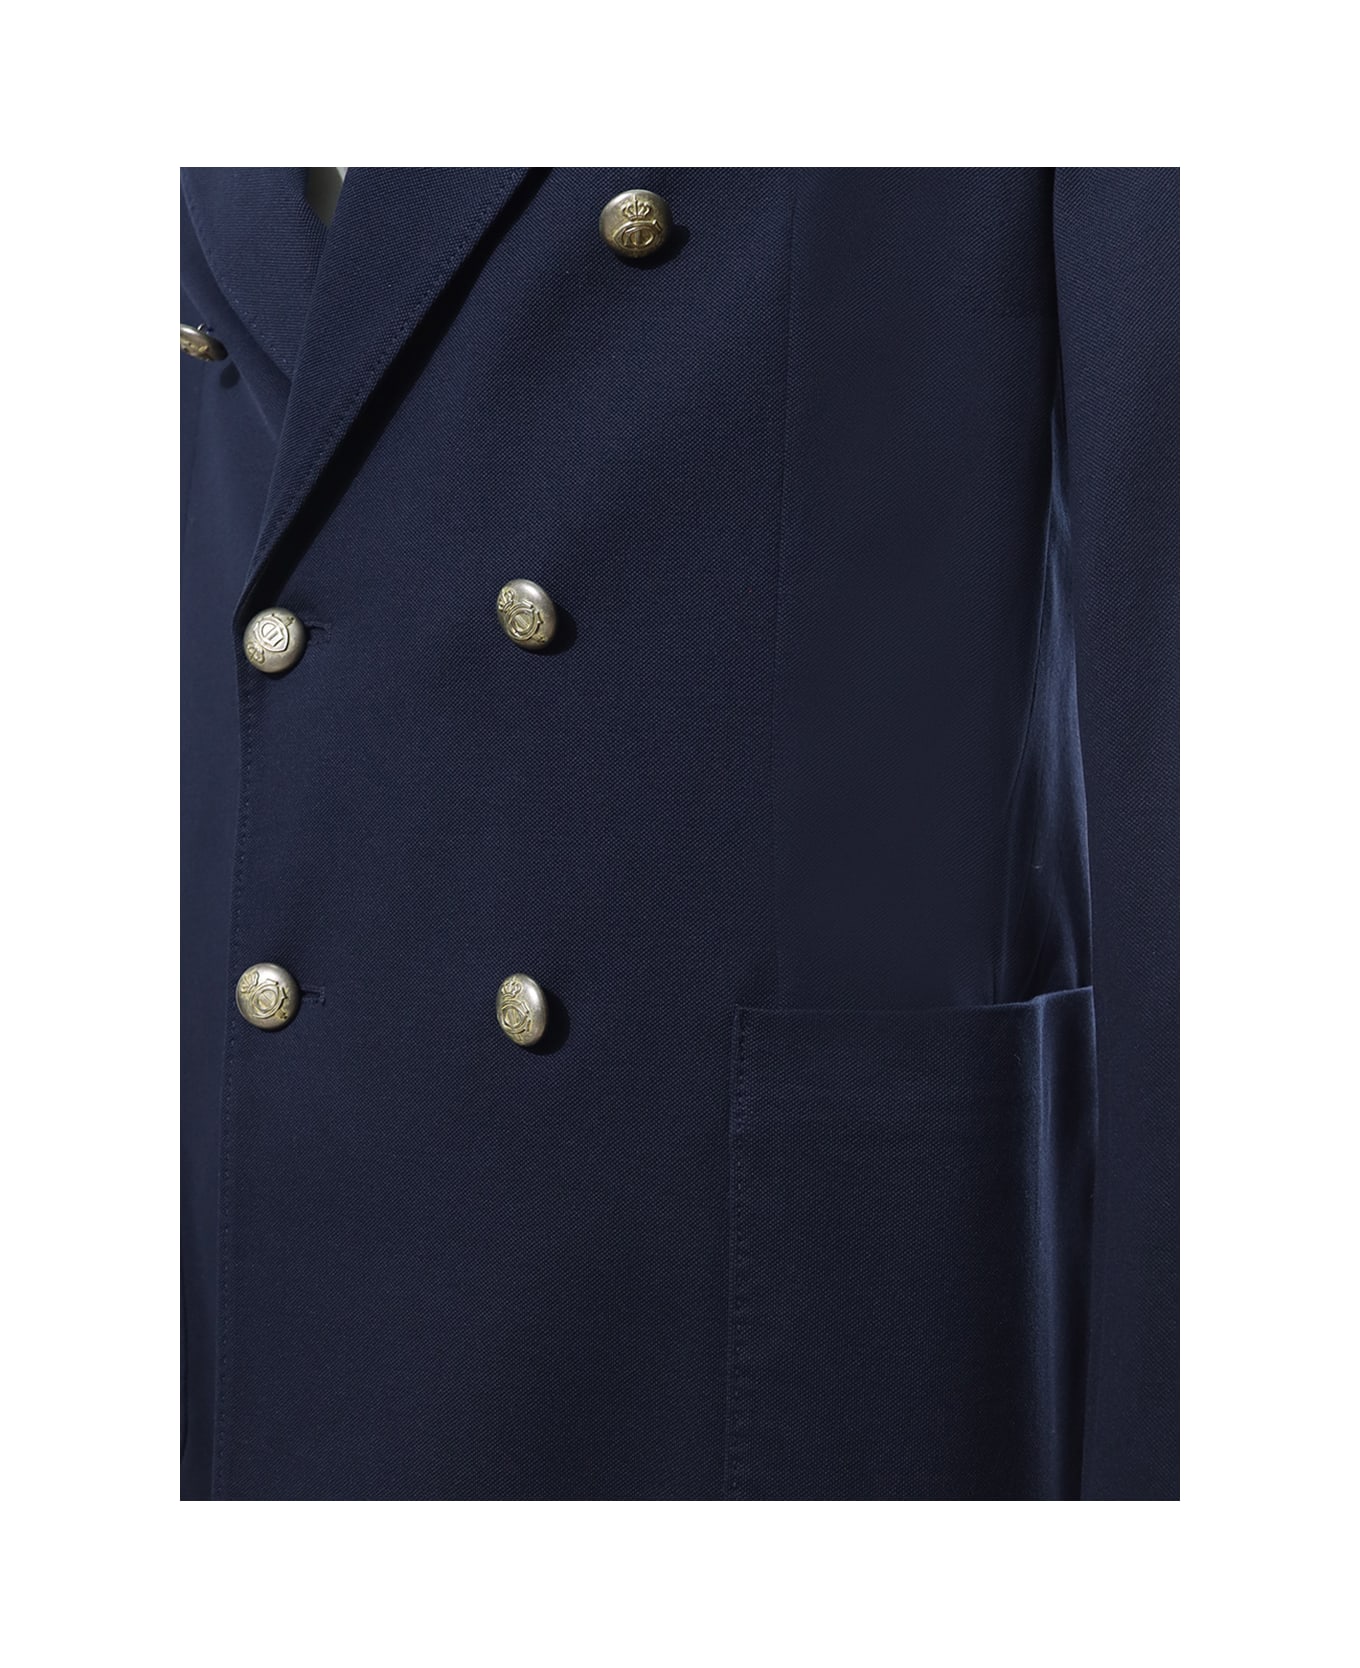 Circolo 1901 Circolo Double-breasted Jacket - Blue